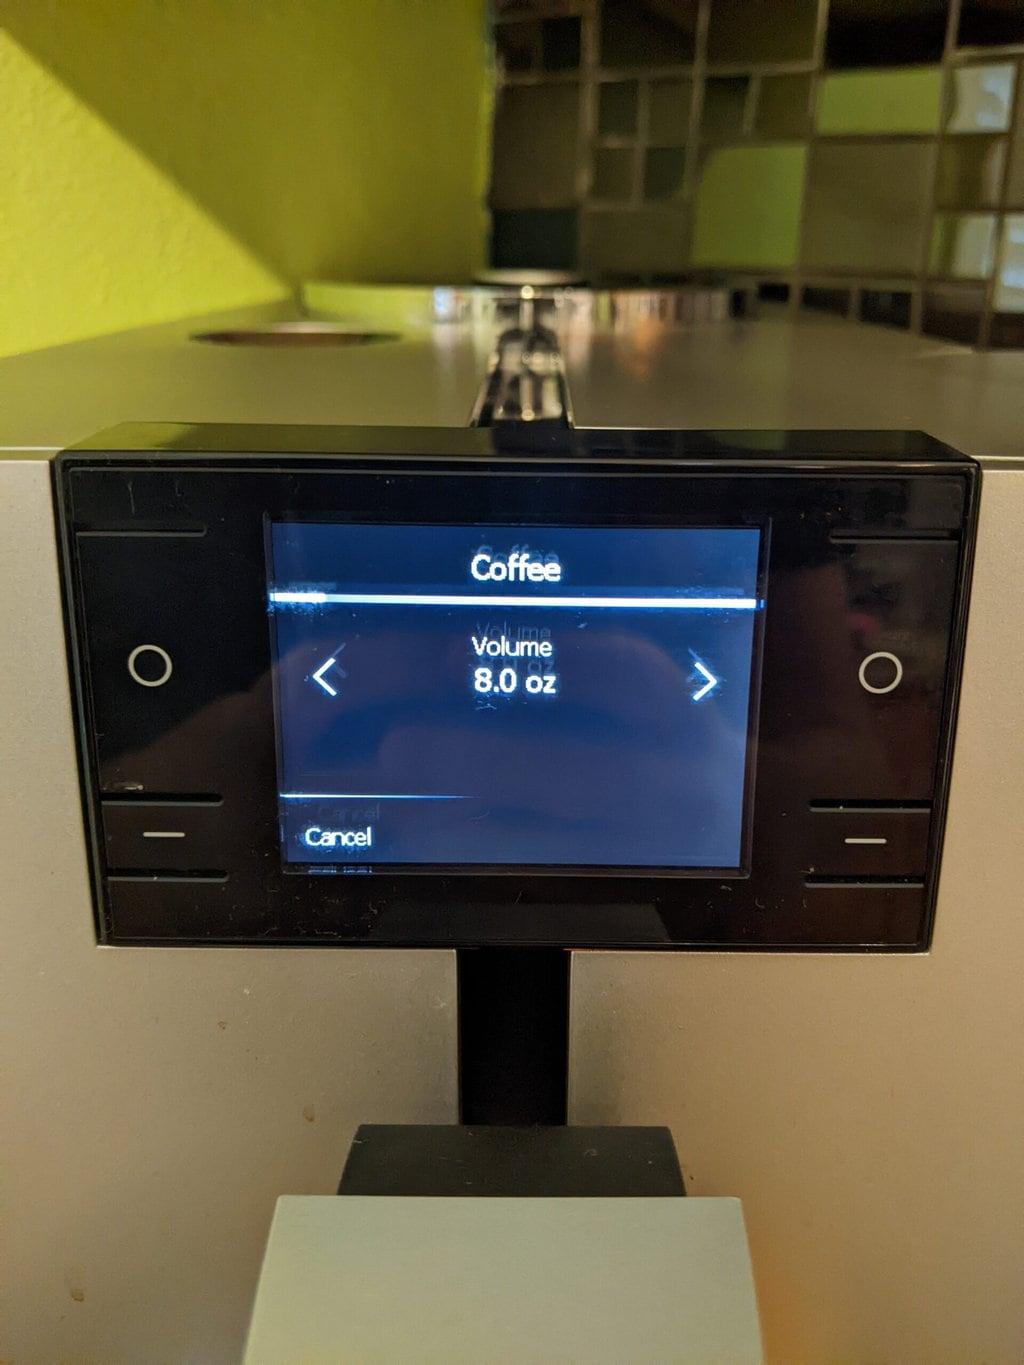 Jura ENA 8 Espresso Machine Display shows the coffee volume